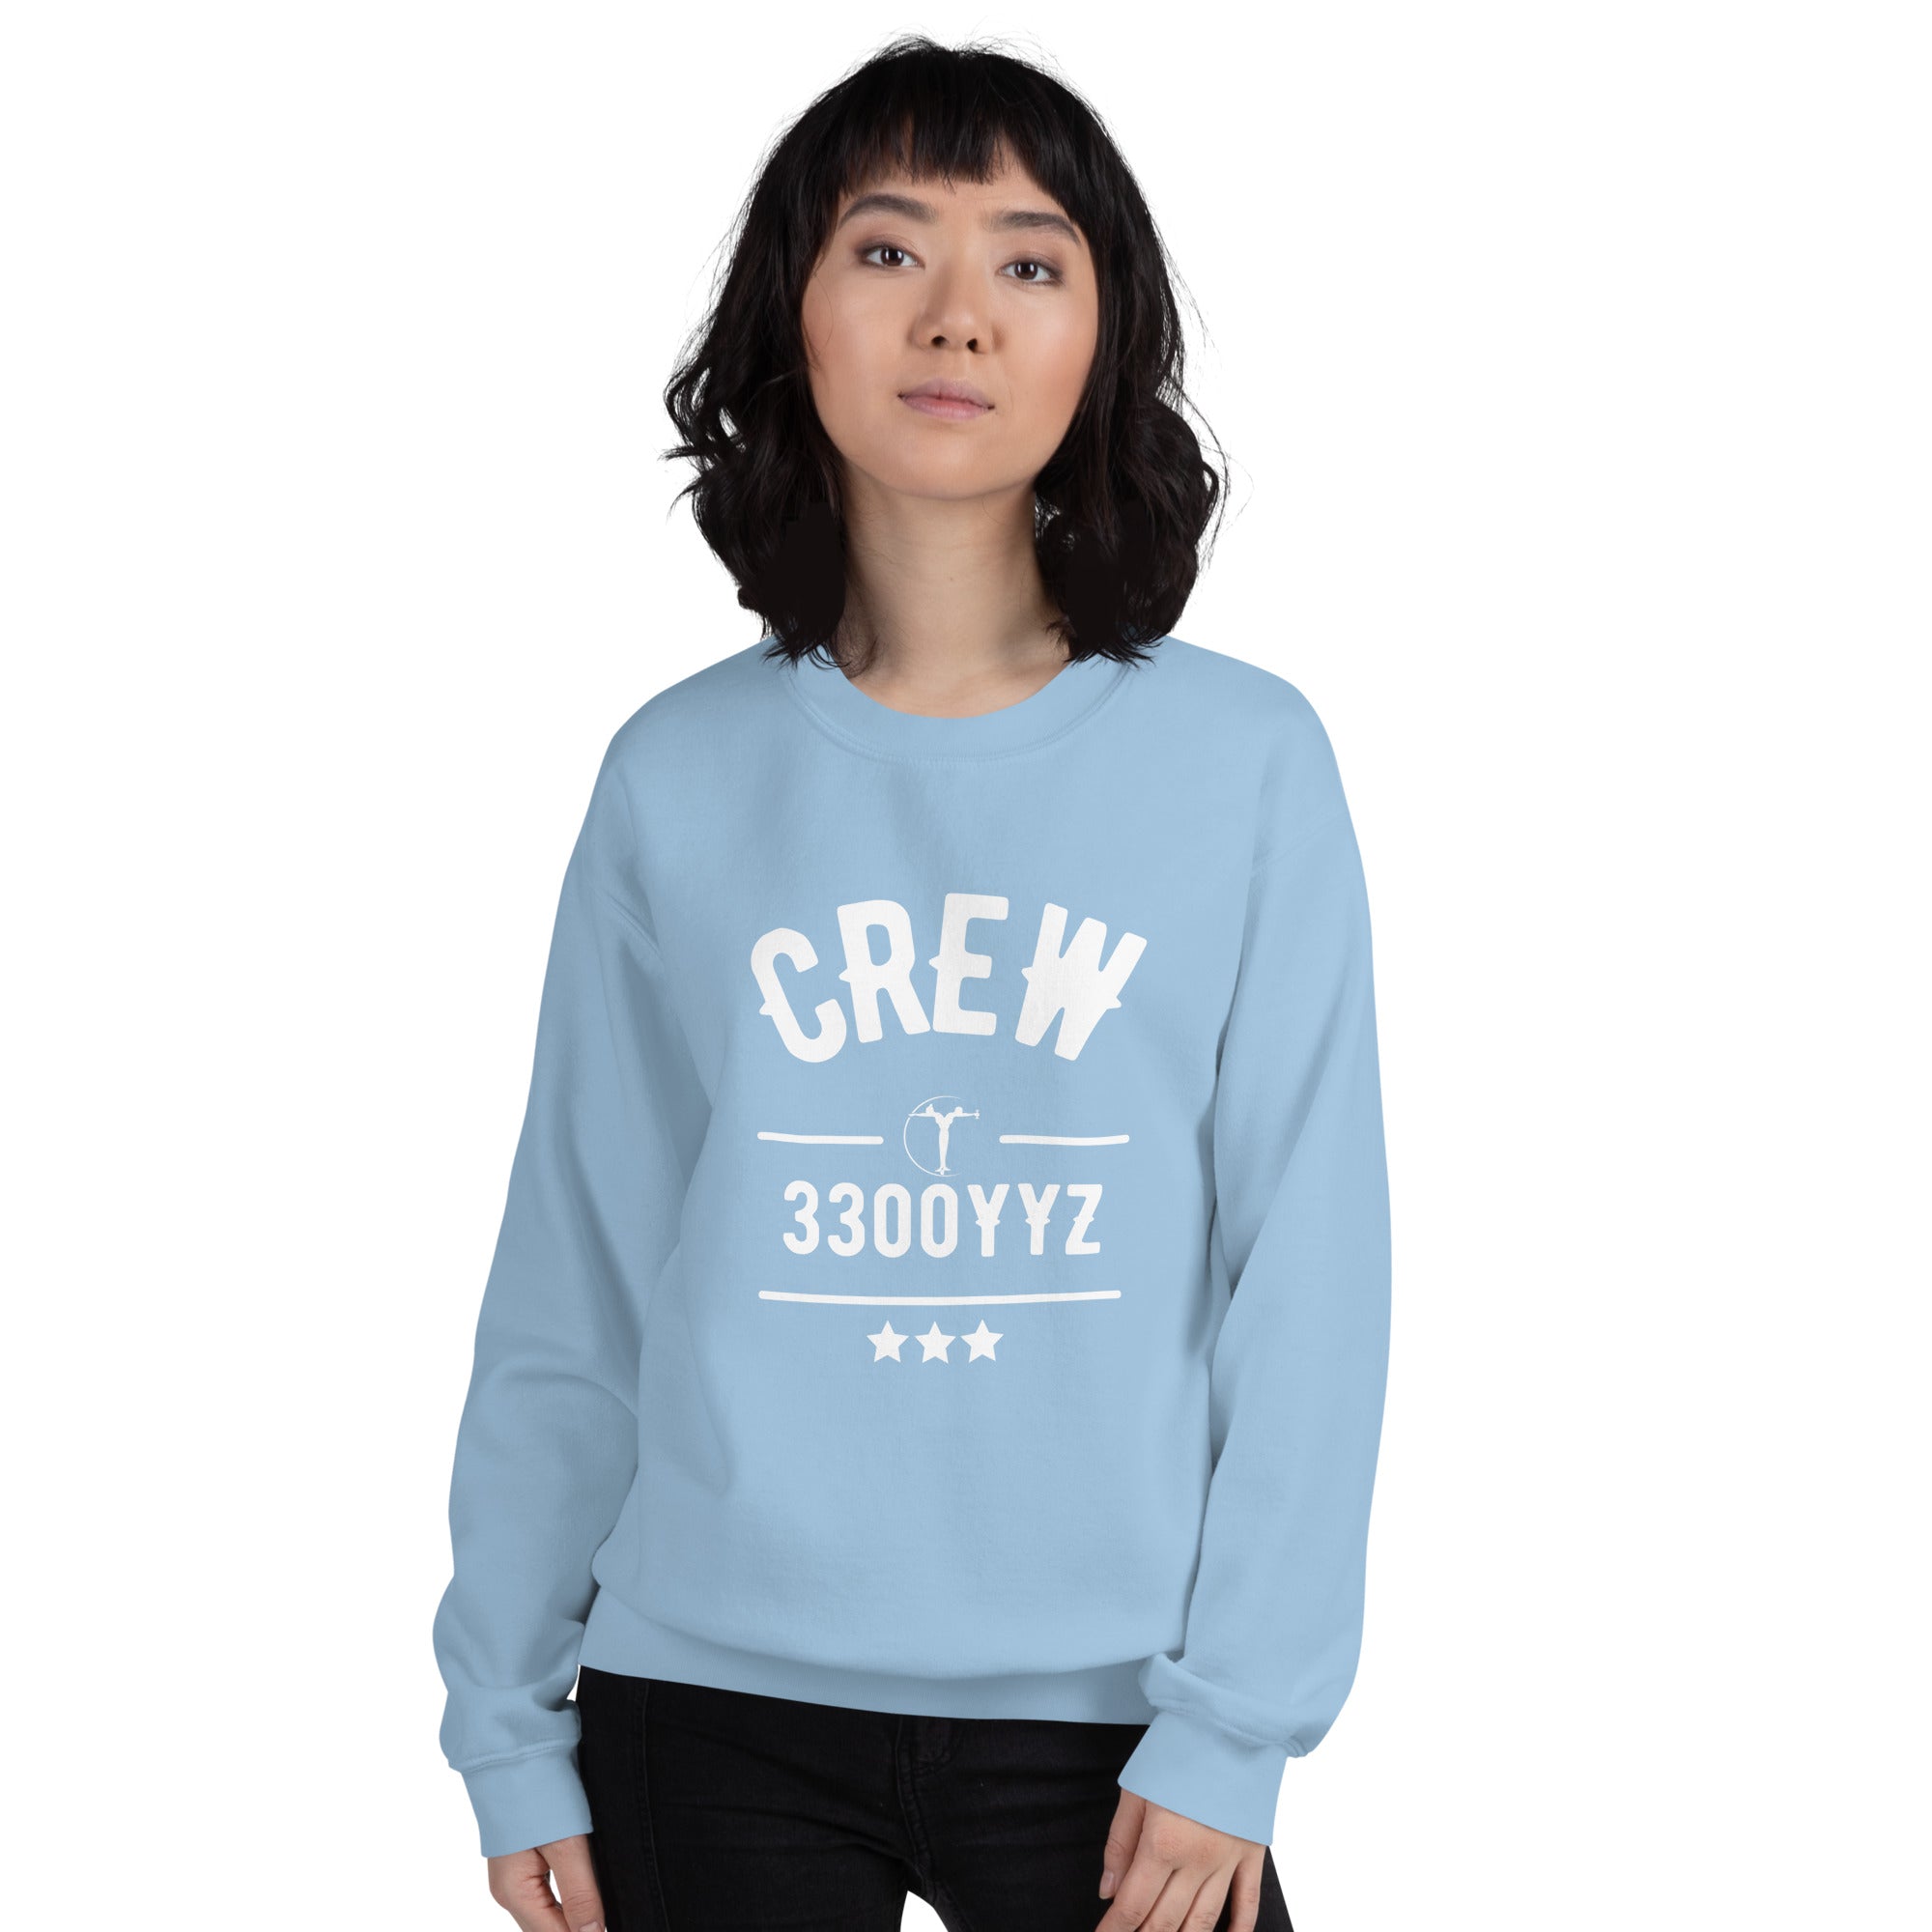 CREW Collection Unisex Sweatshirt - Adult - TandemWear